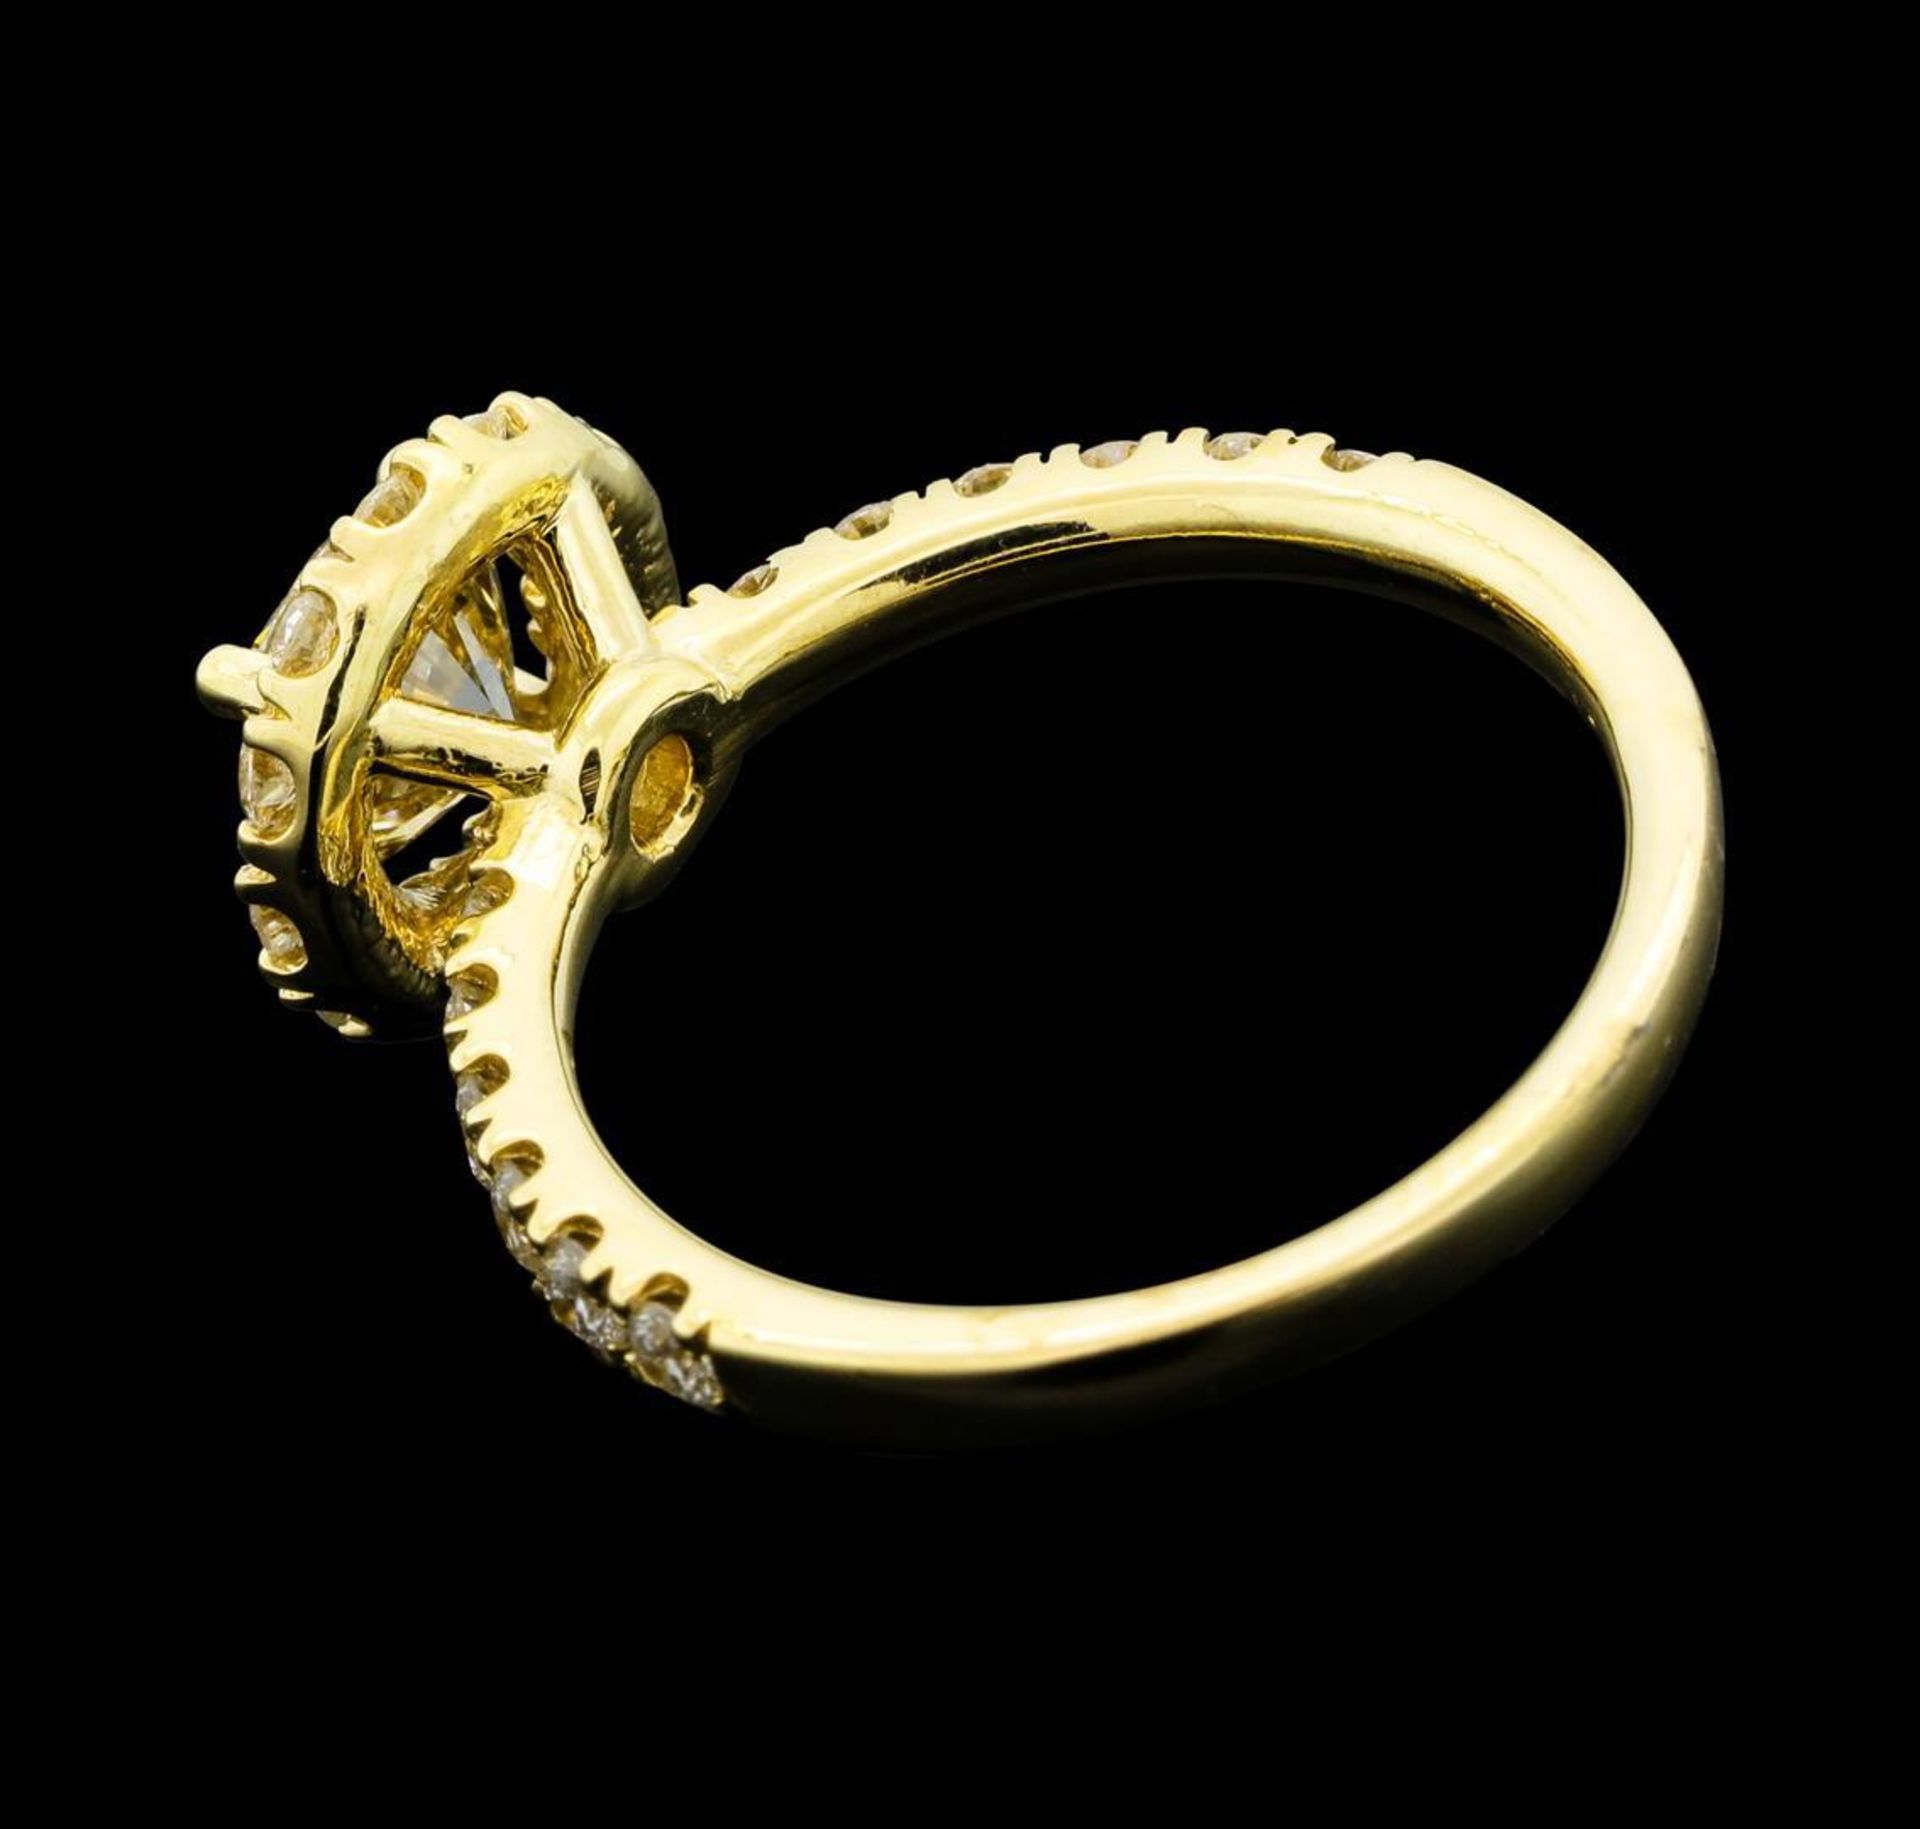 1.66 ctw Diamond Ring - 14KT Yellow Gold - Image 3 of 5